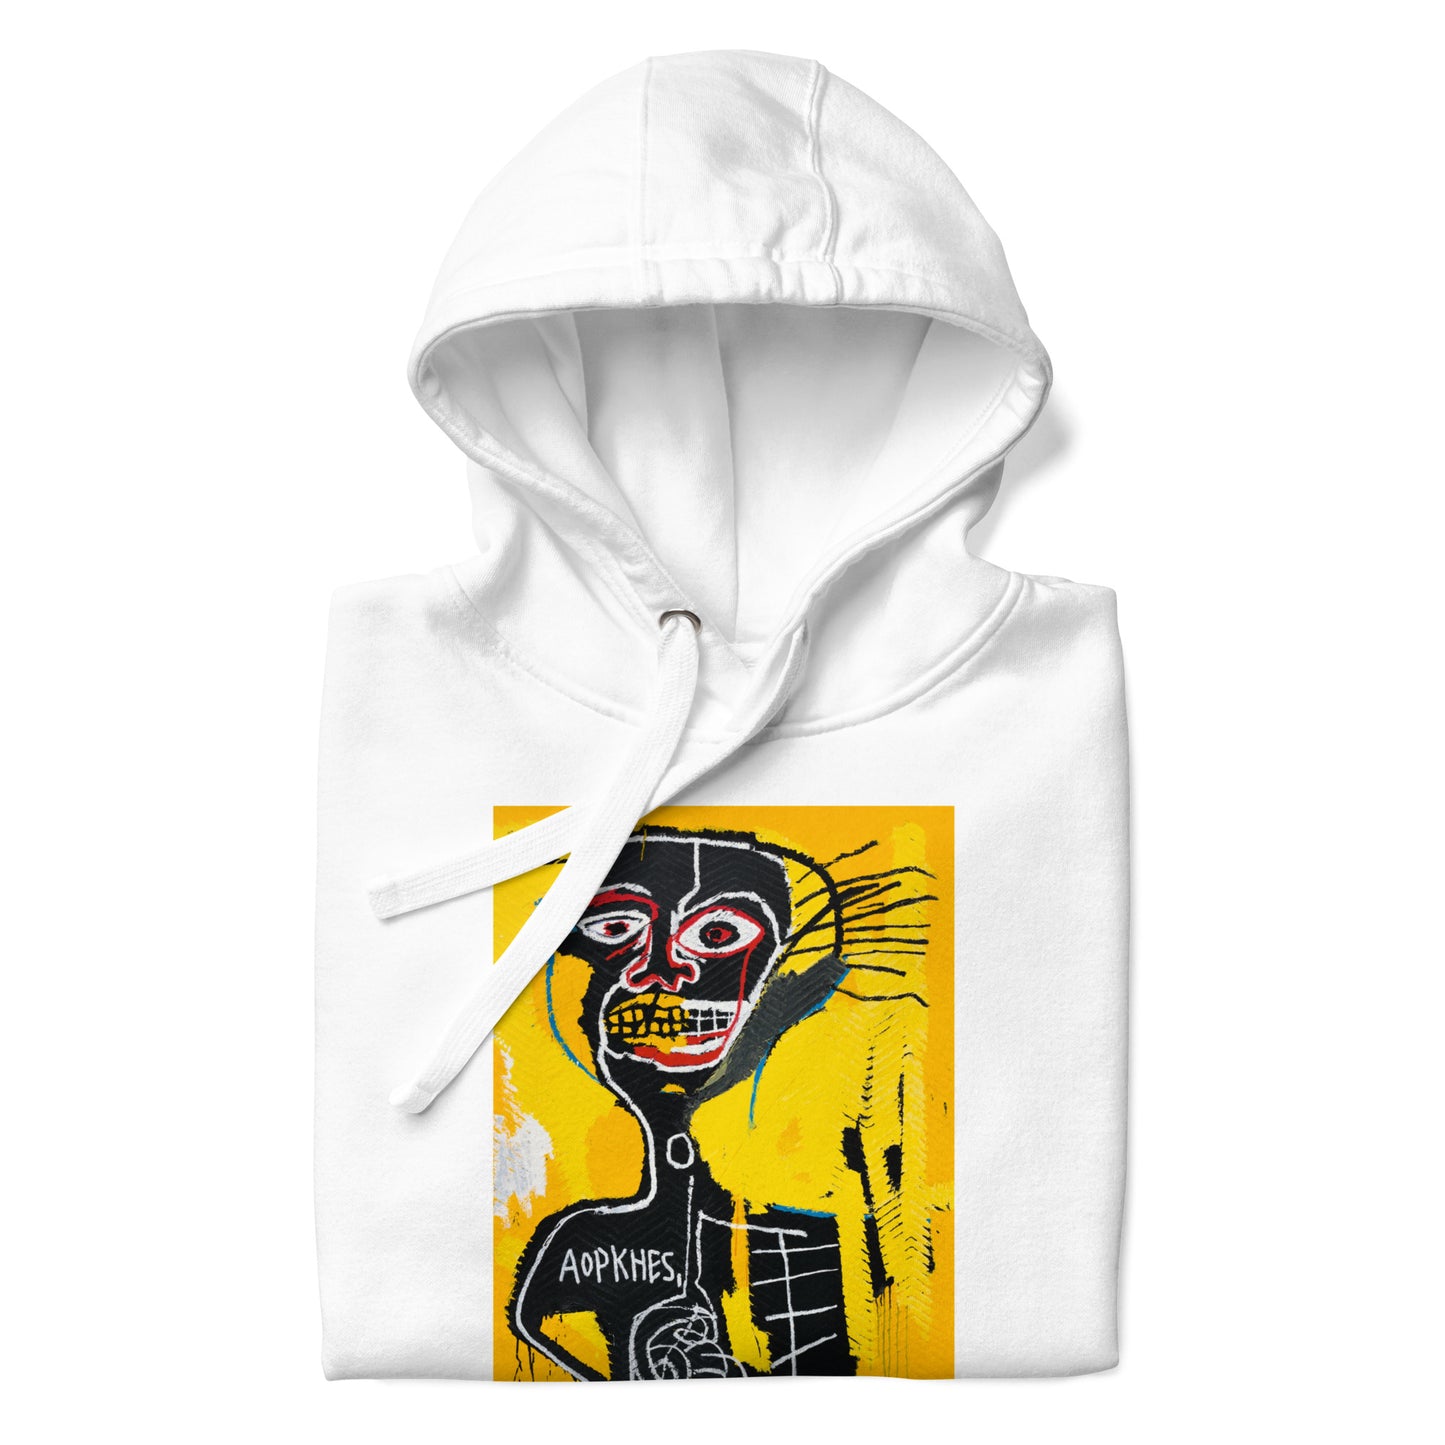 Jean-Michel Basquiat "Cabeza" Artwork Printed Premium Streetwear Sweatshirt Hoodie White